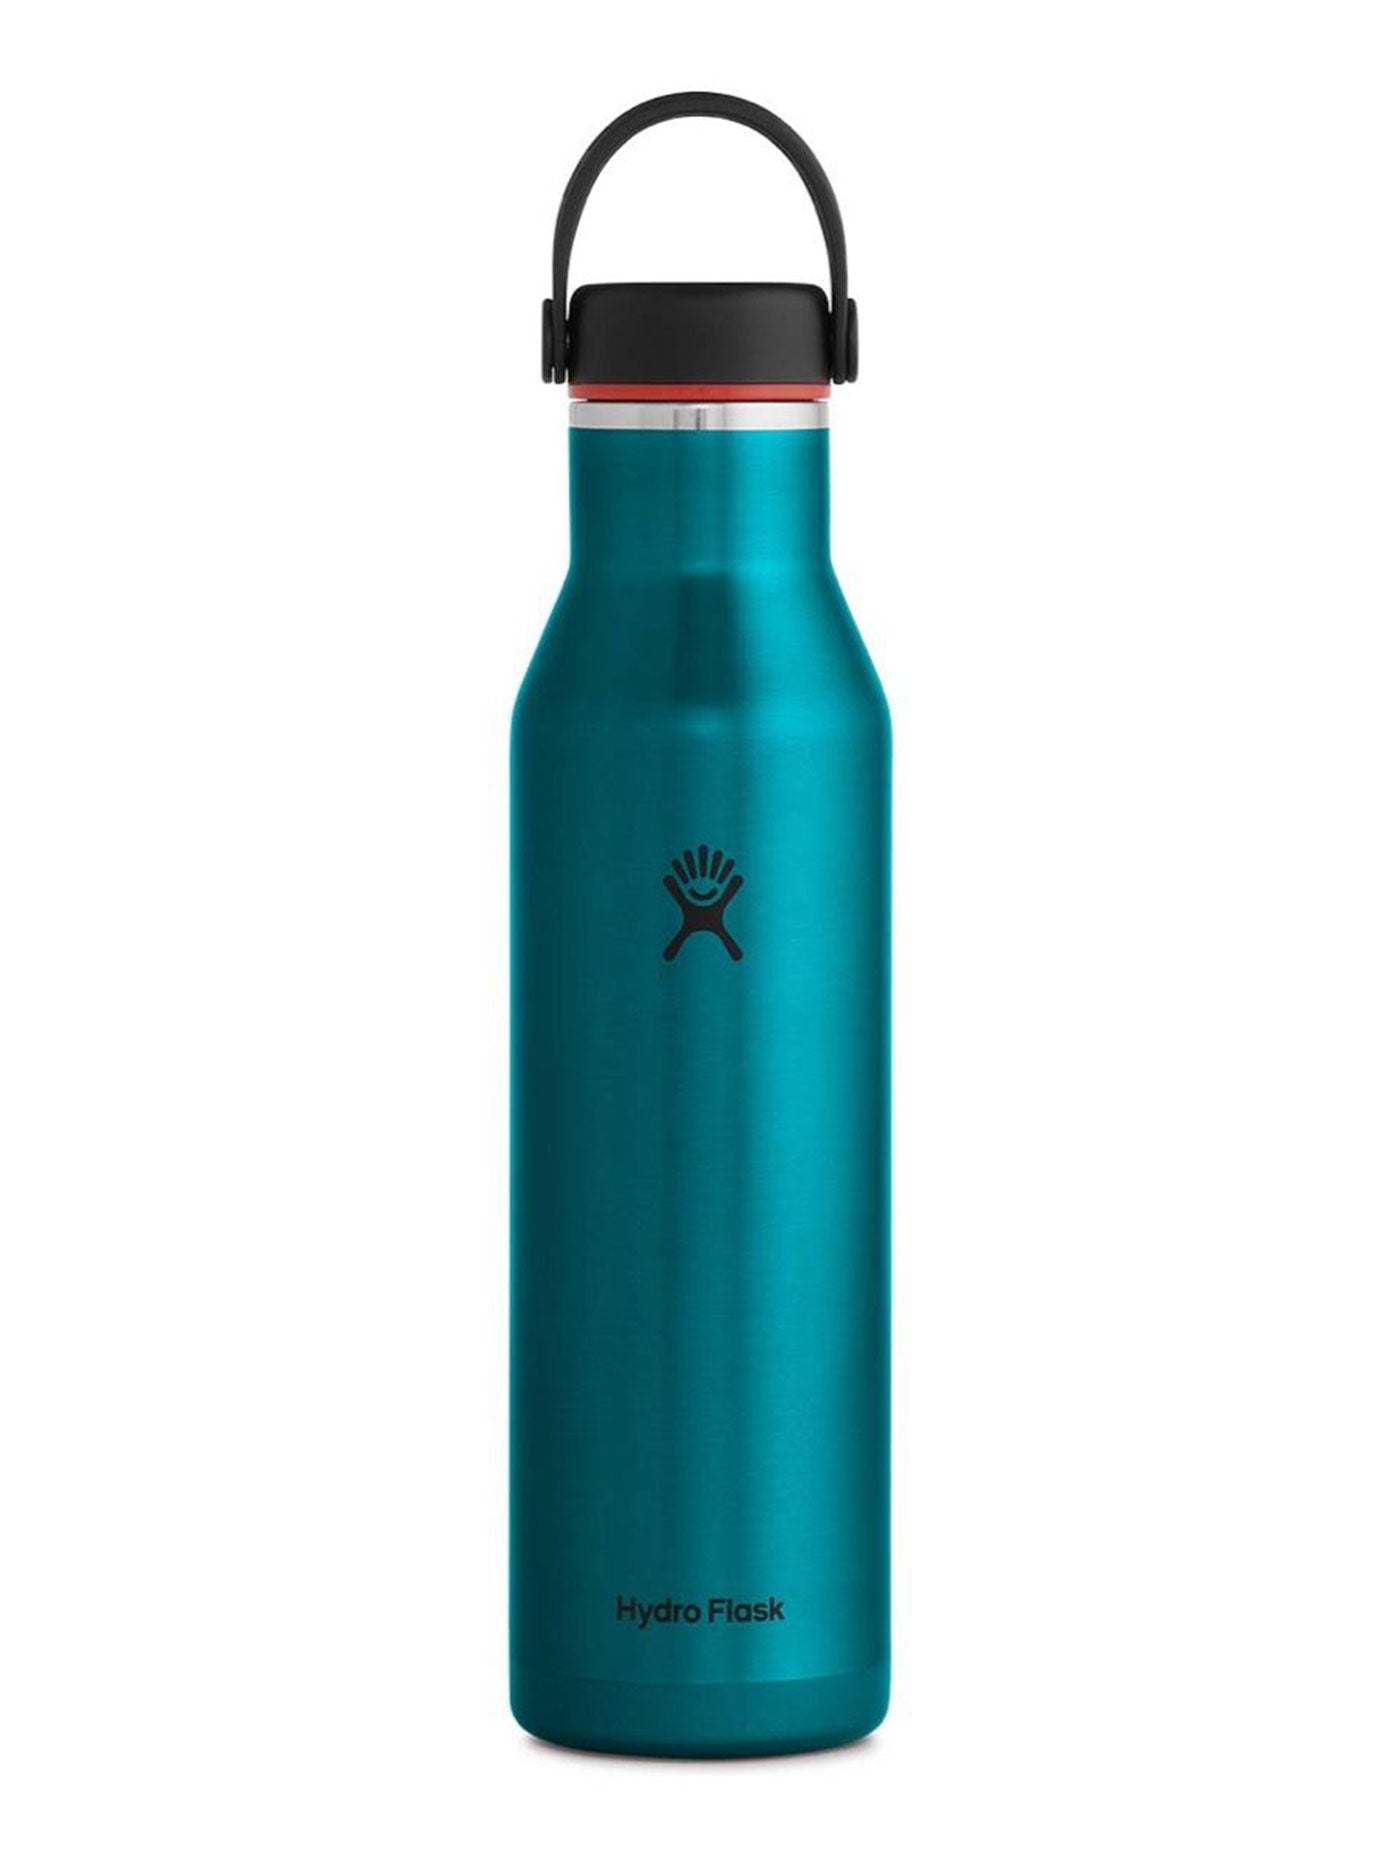 Hydro Flask Lightweight Standard Mouth 21oz Bottle